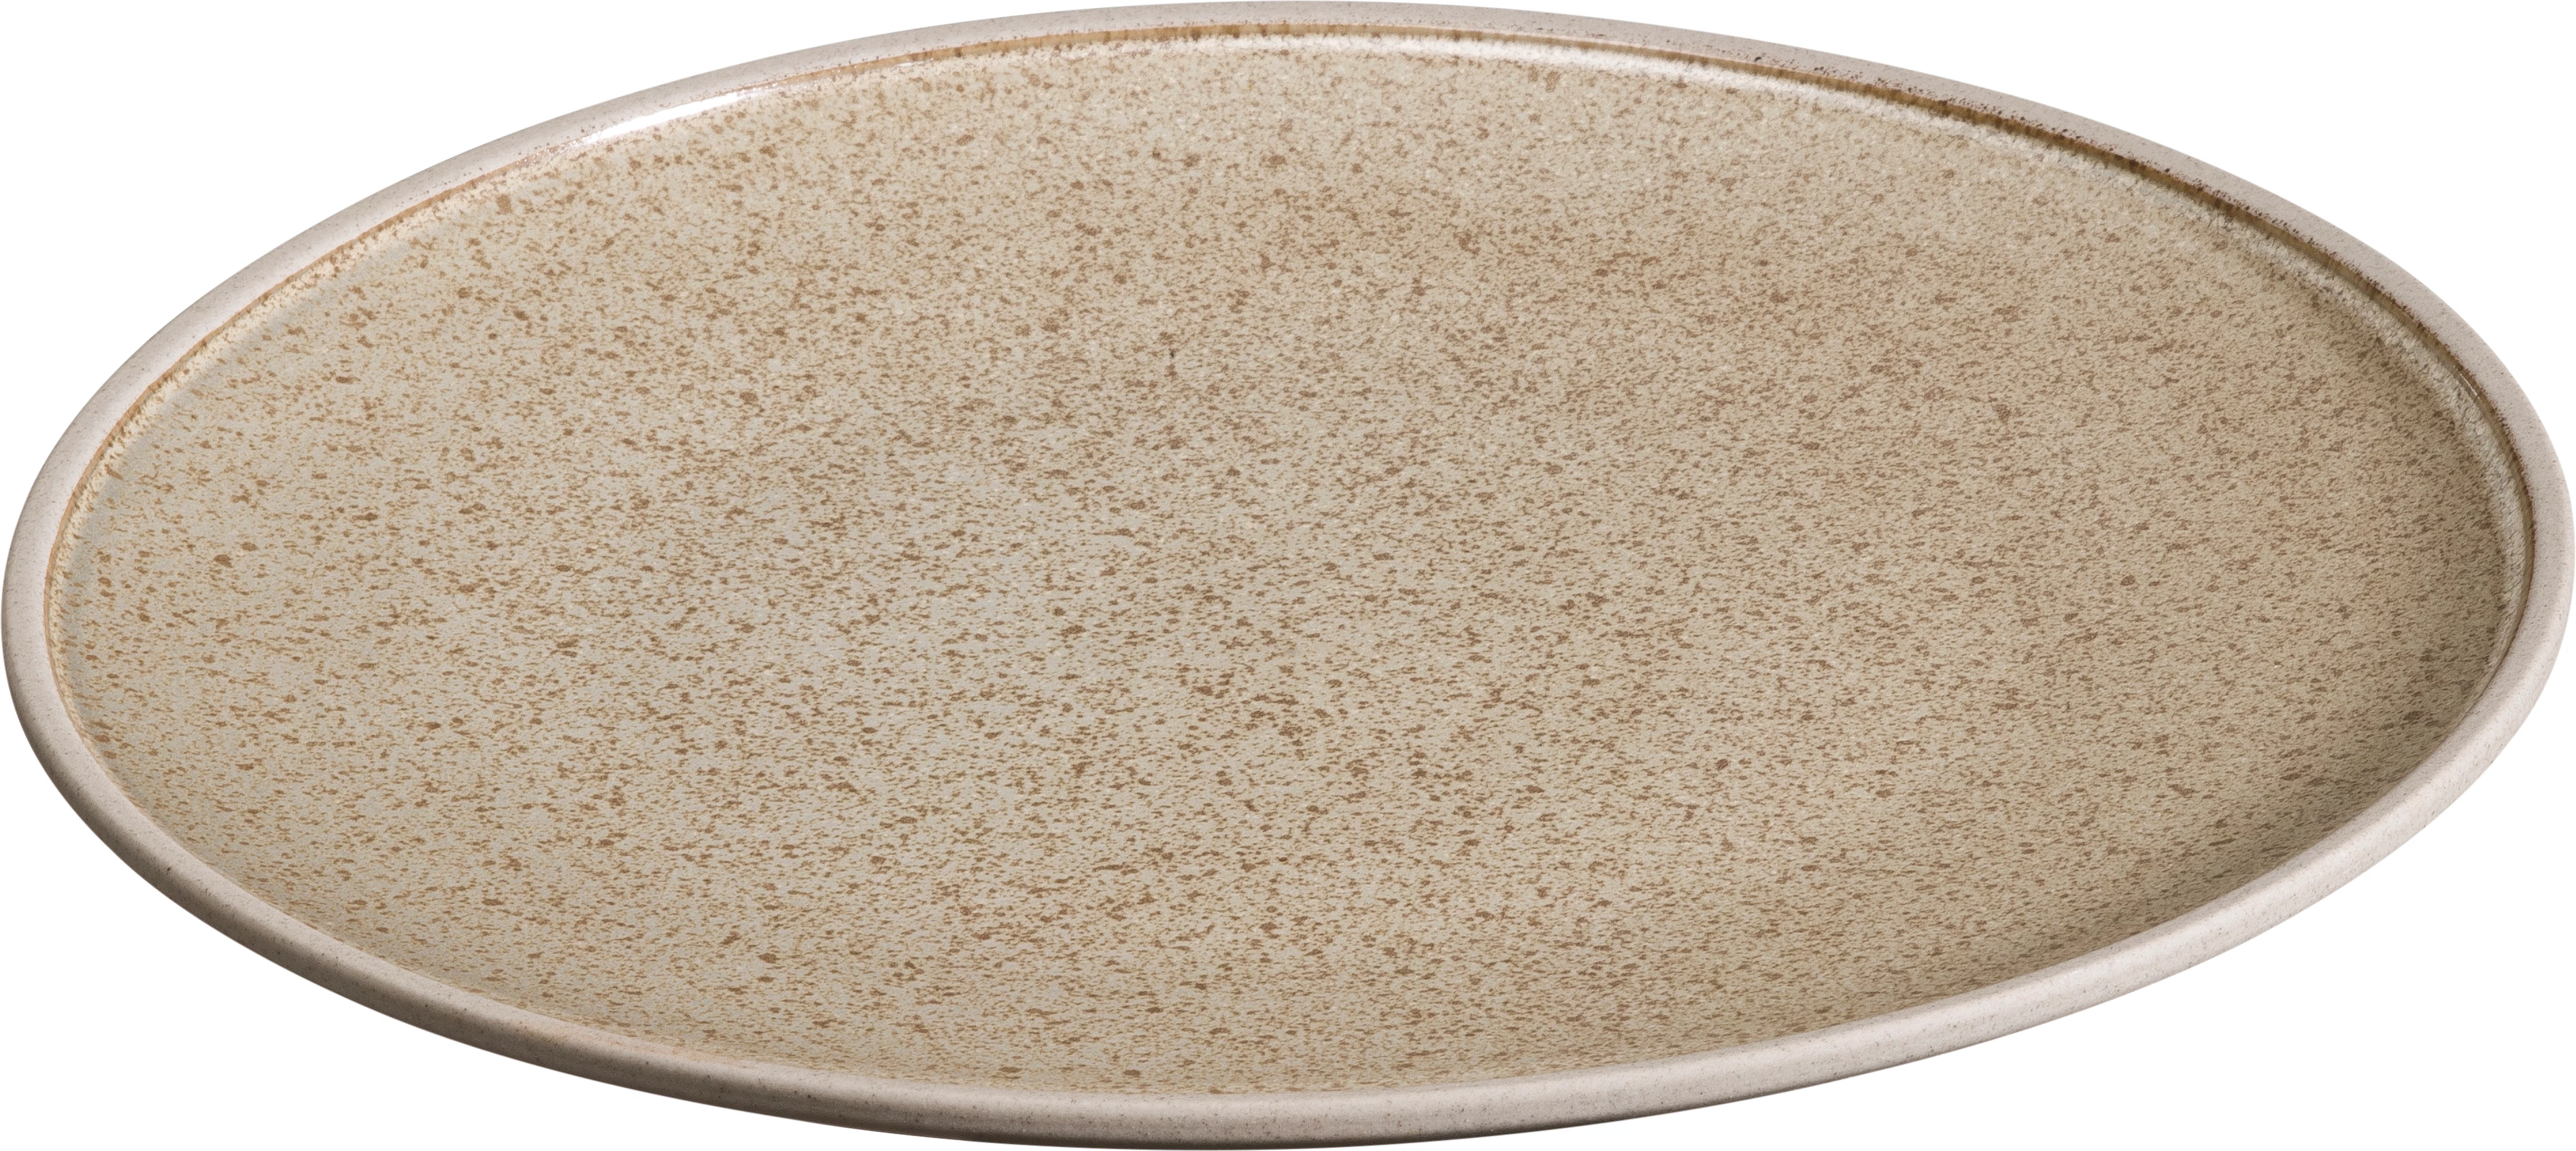 Sorelle tallerken uden fane, sand, ø26 cm